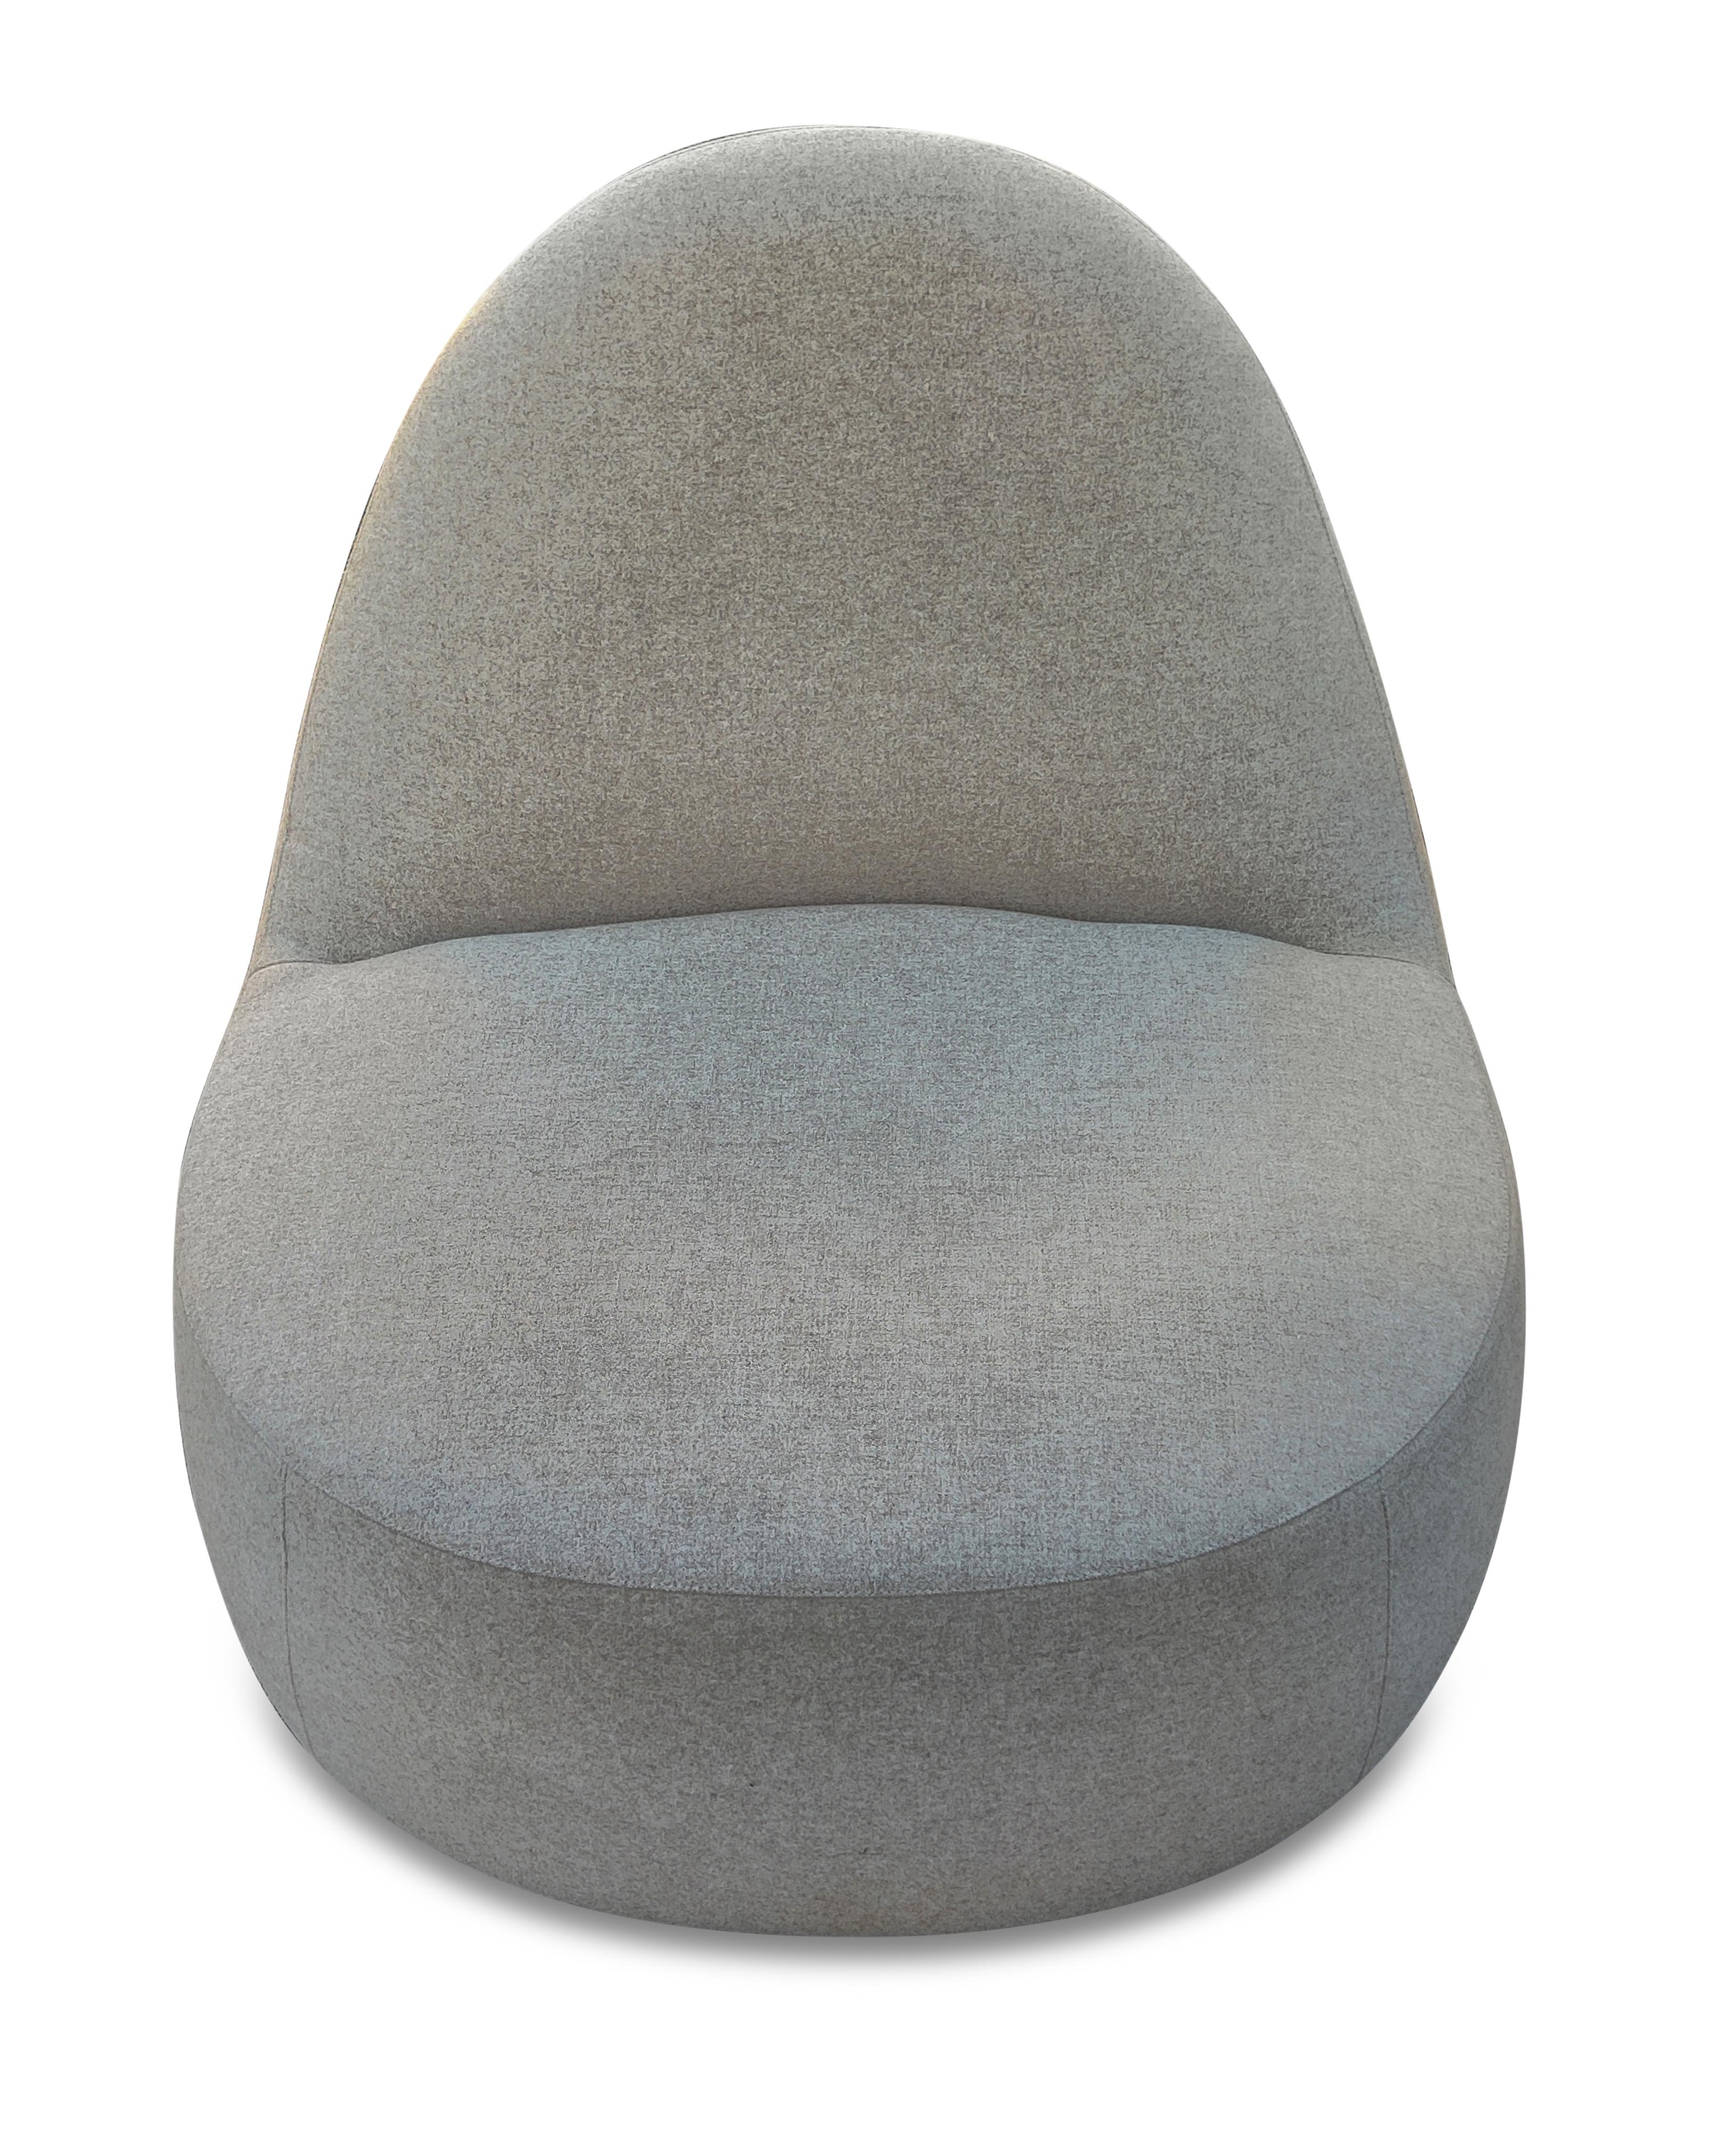 Contemporary Mitt Lounge Chairs Pair, Claudia + Harry Washington, Bernhardt Design Space-Age